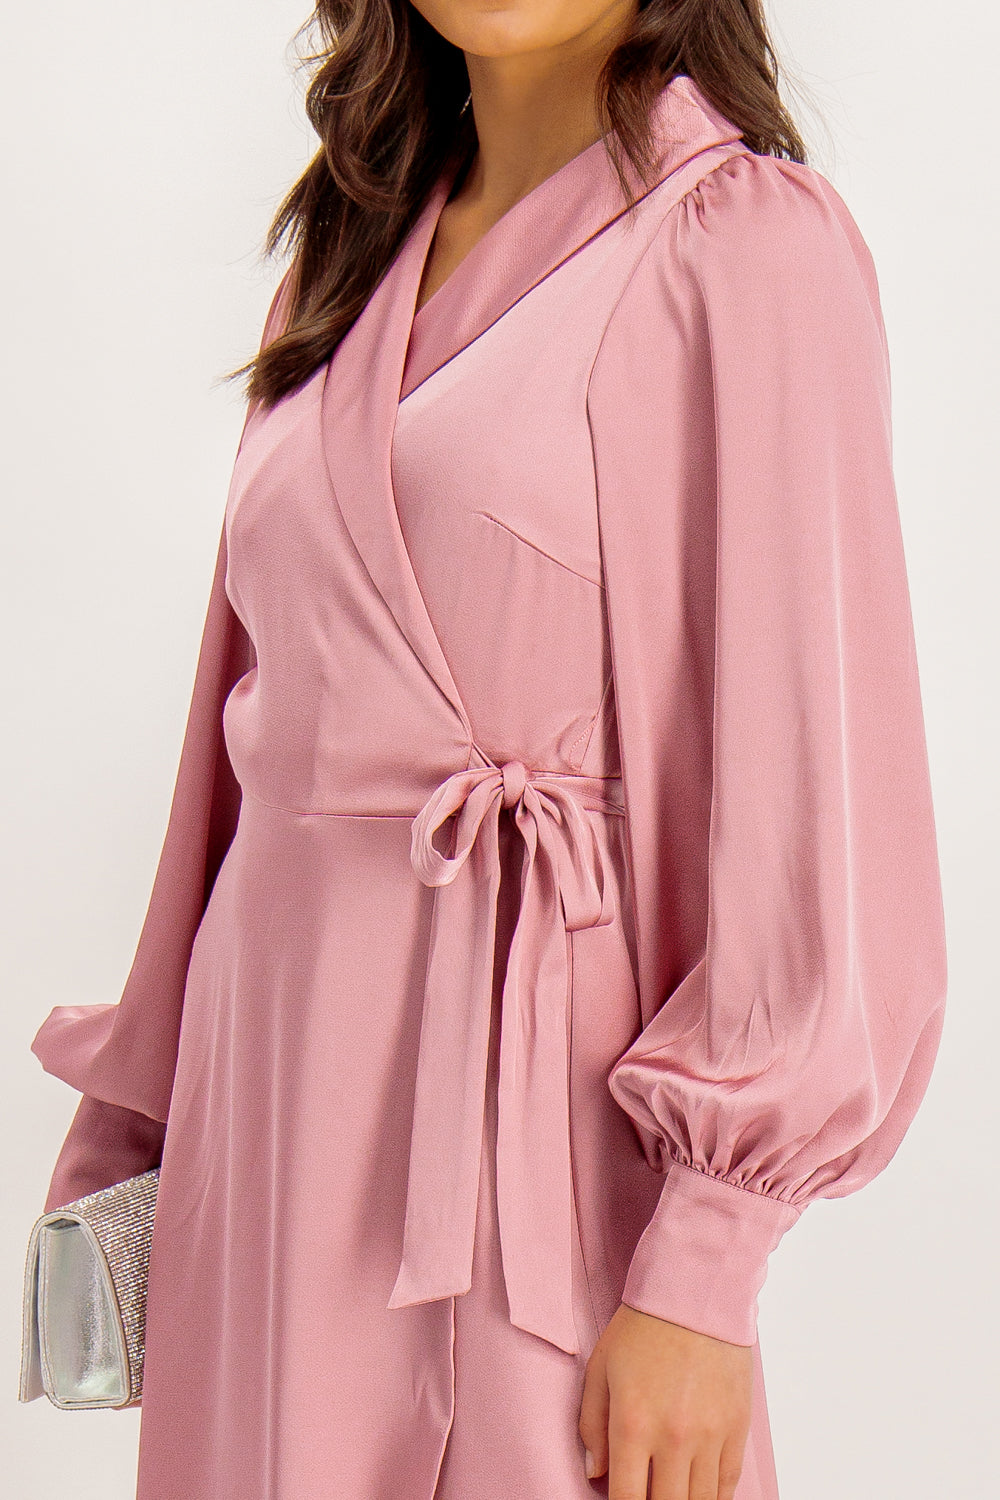 Enna Ravenna Pink Short Wrap Dress